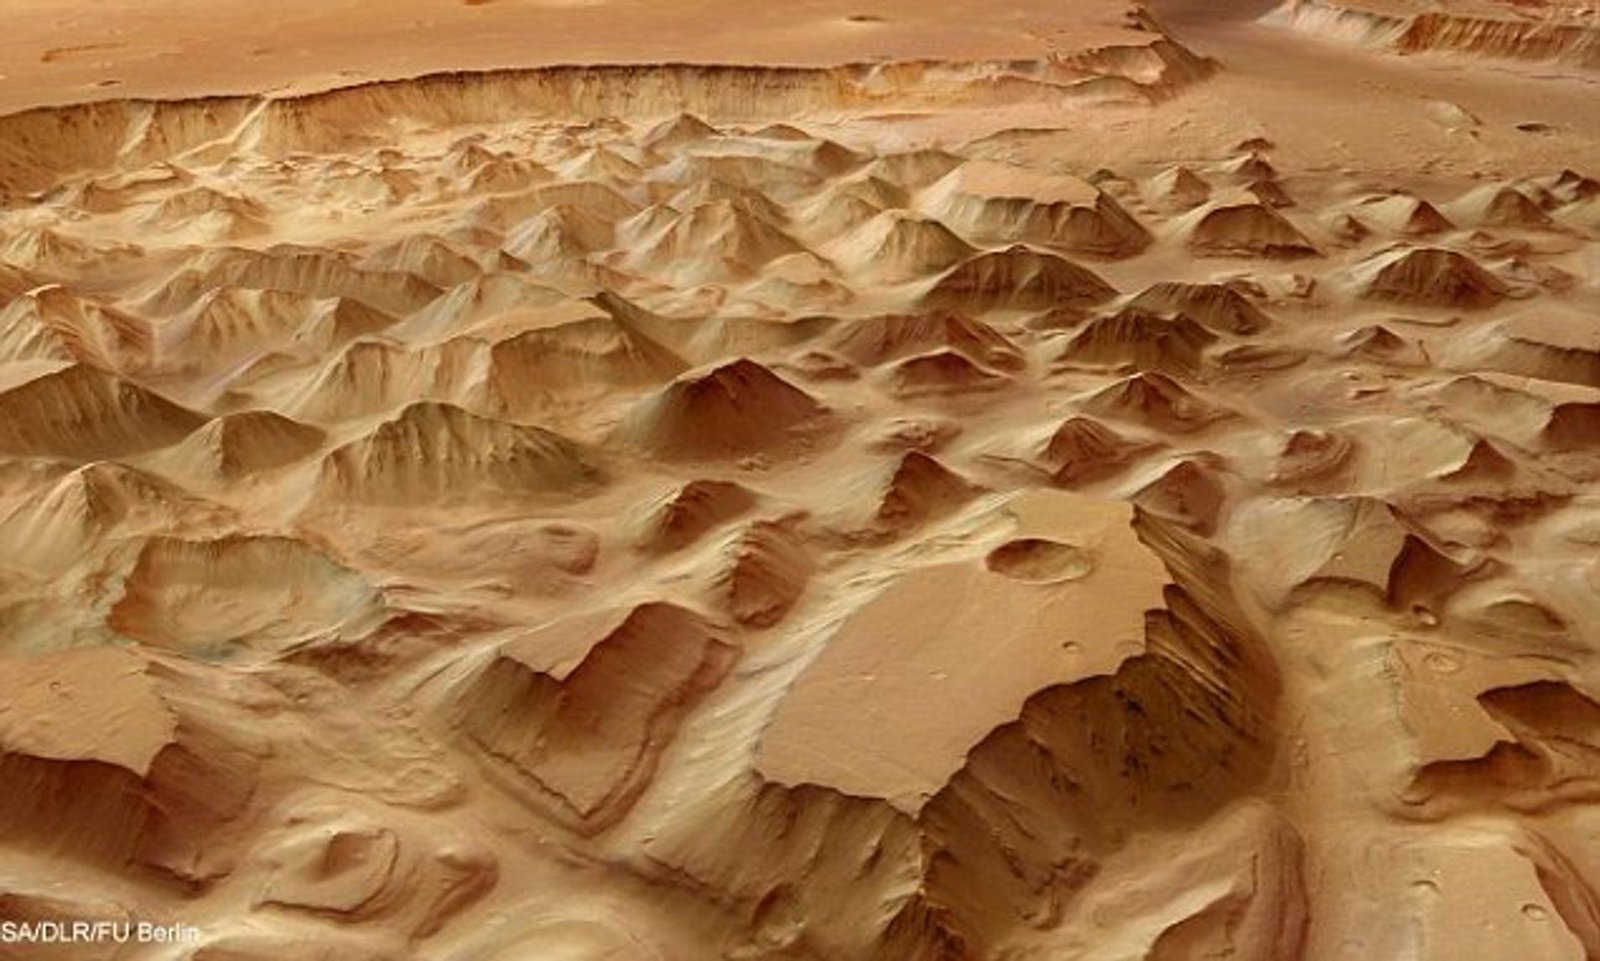 Mud lakes on Mars may hide signs of life